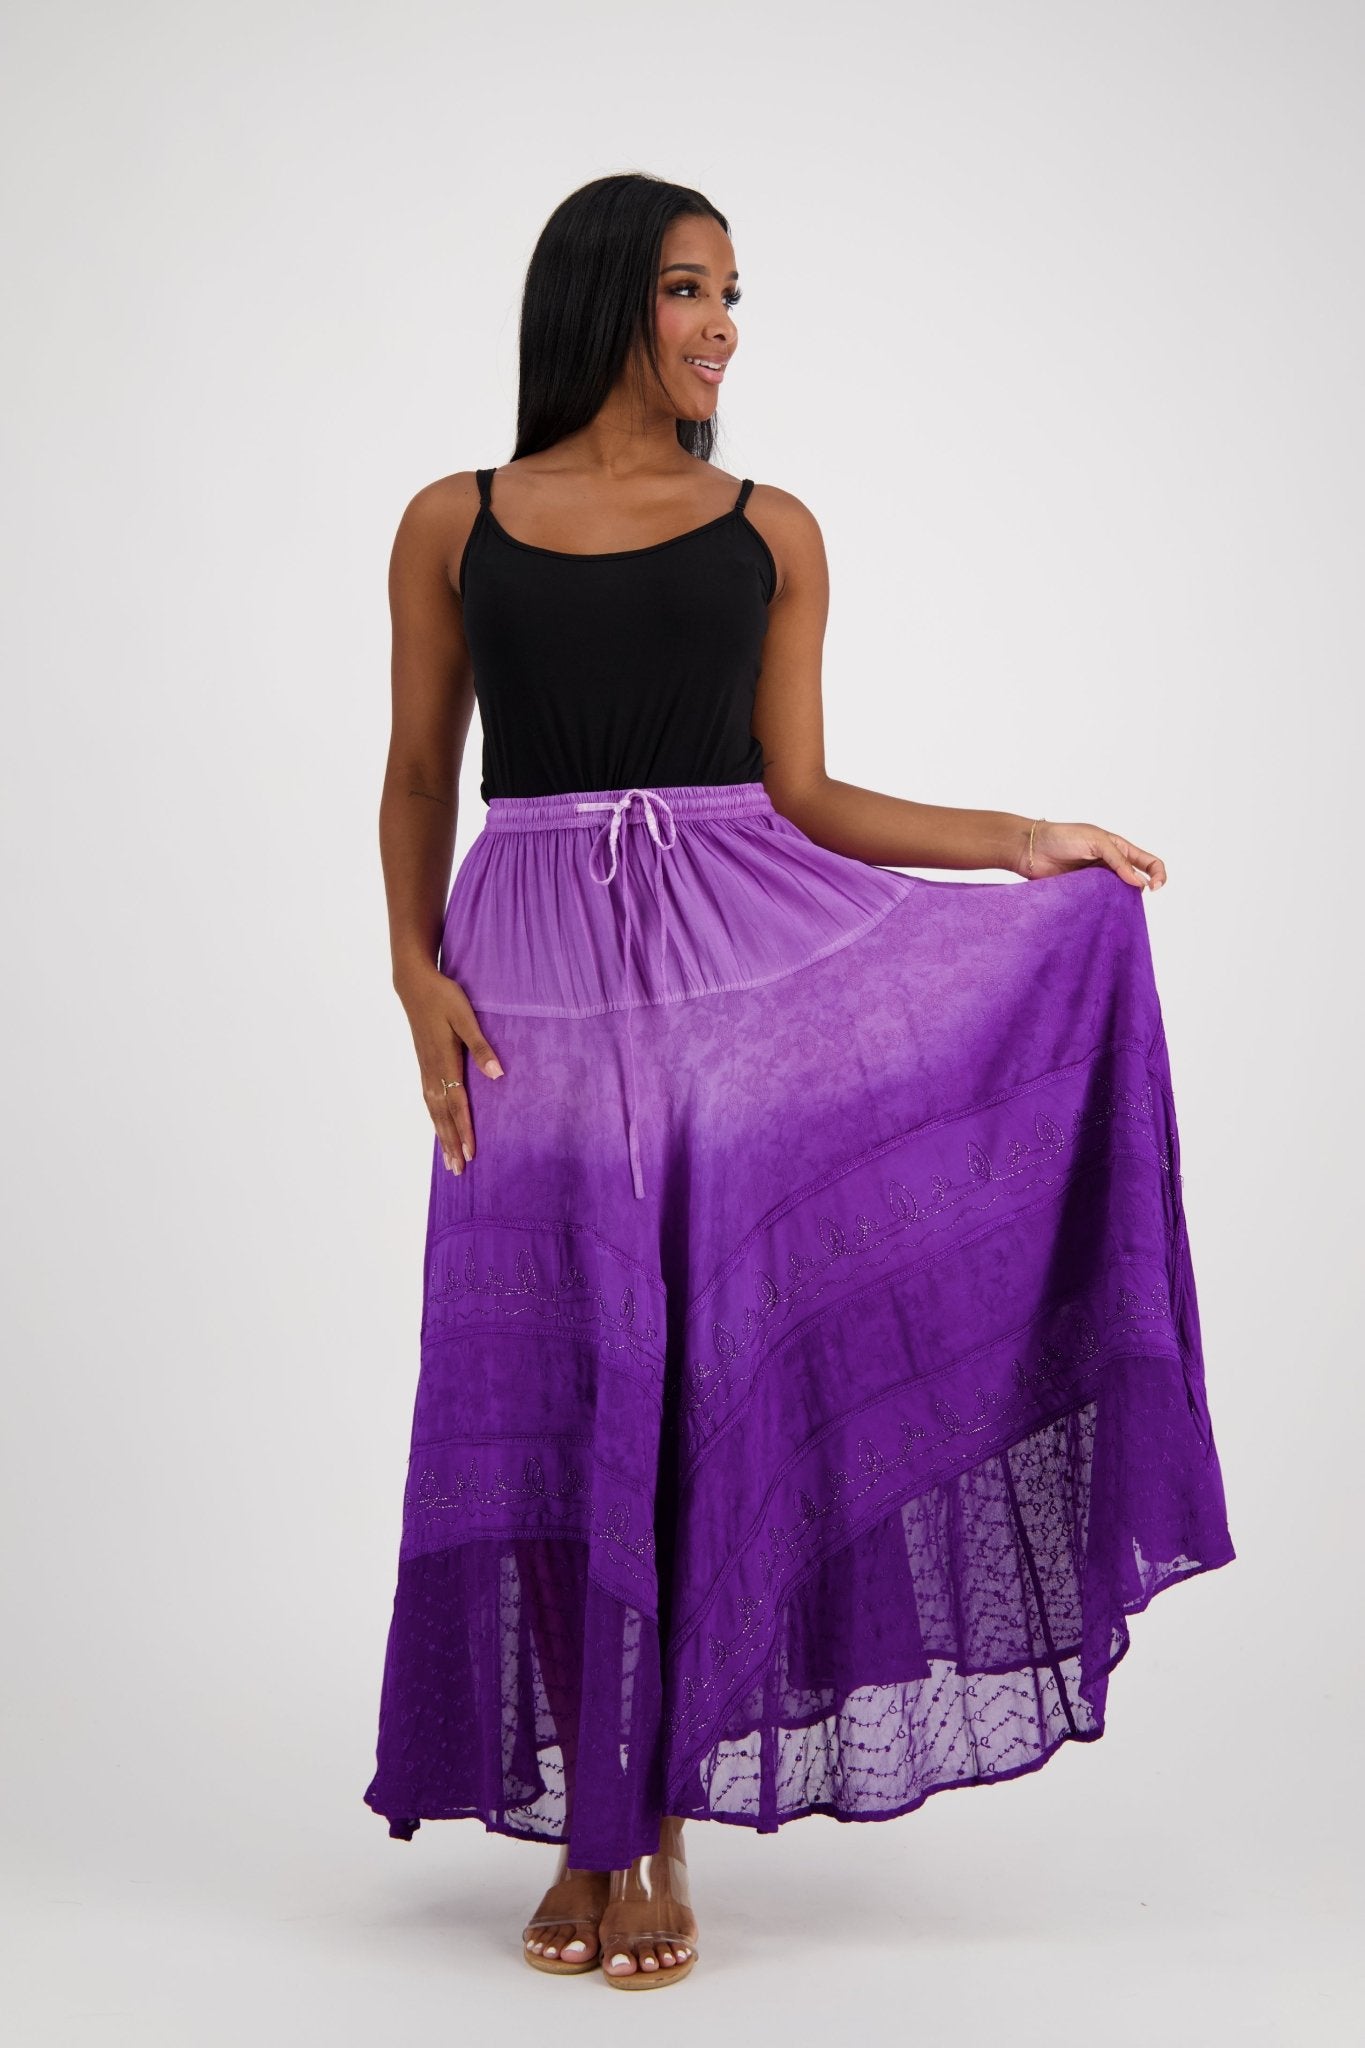 Ombre Acid Wash Skirt One Size 6 Colors 13228 - Advance Apparels Inc